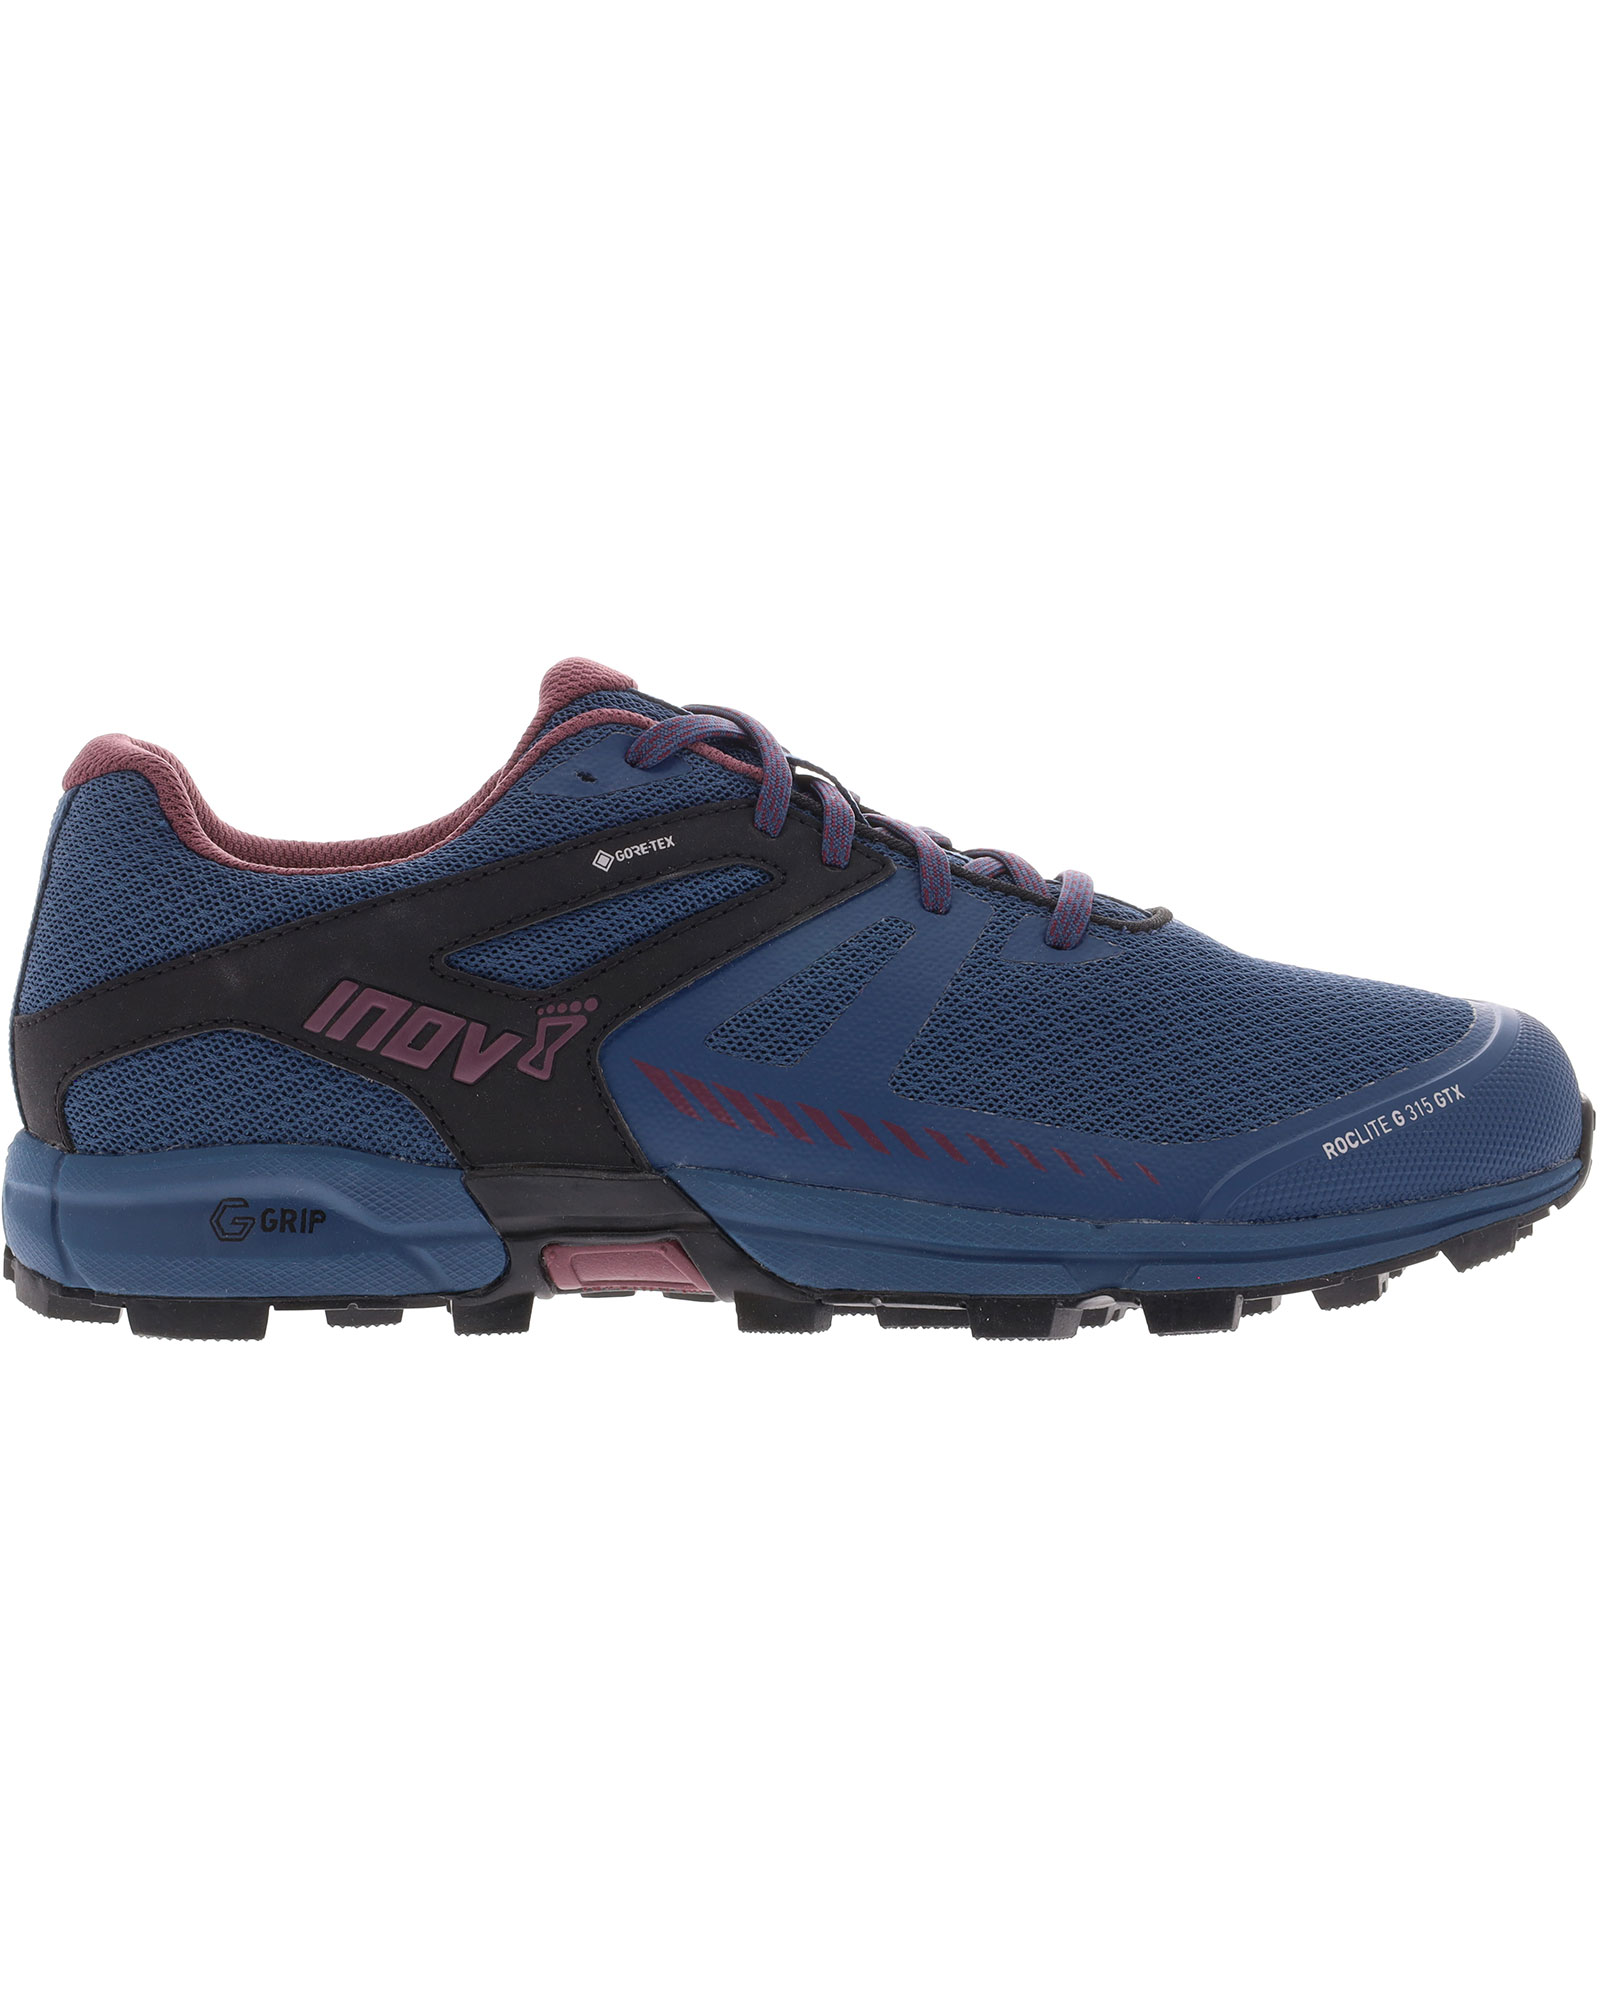 Inov 8 Roclite G 315 V2 GORE TEX Women’s Shoes - Navy/Purple UK 8